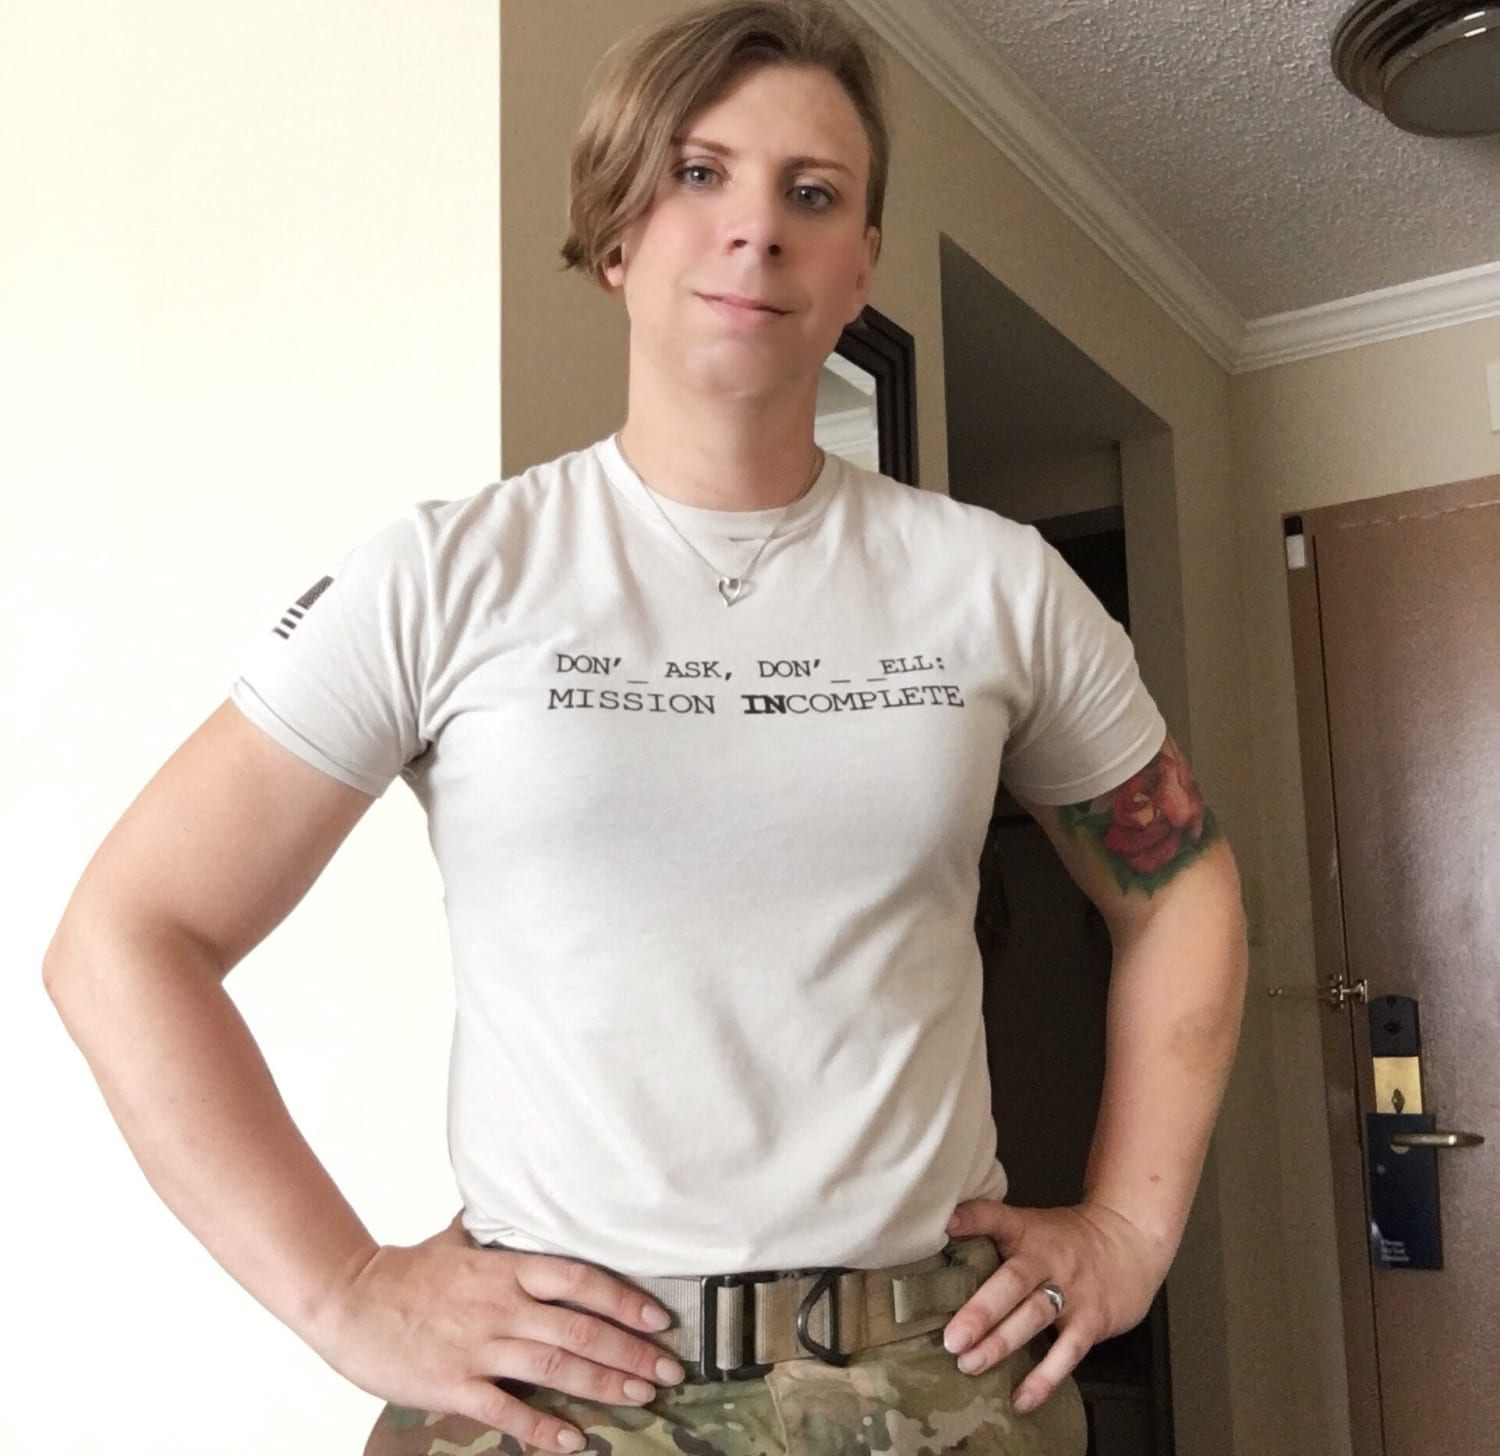 Гендеры в армии сша